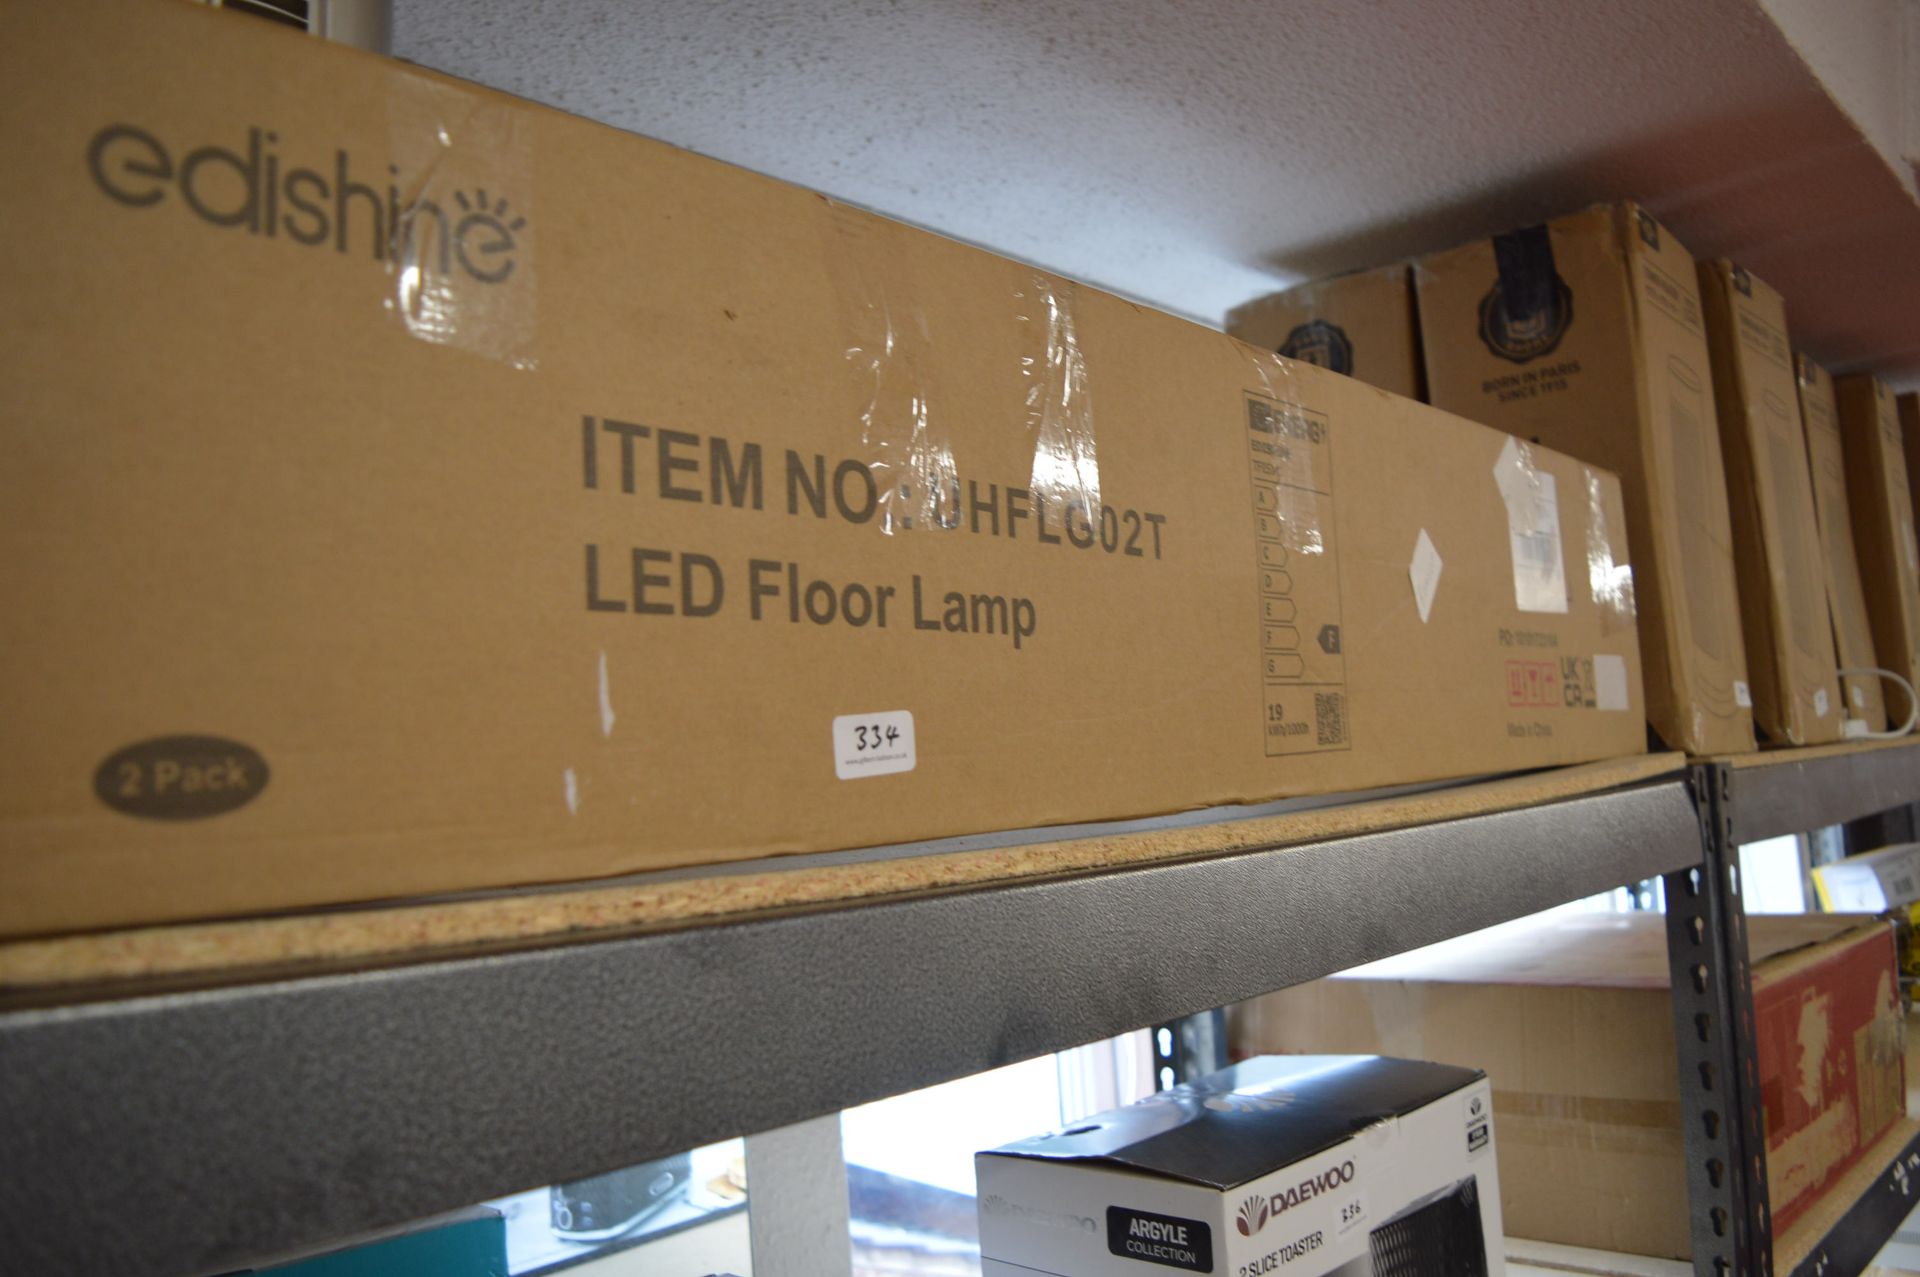 *LED Floor Lamp